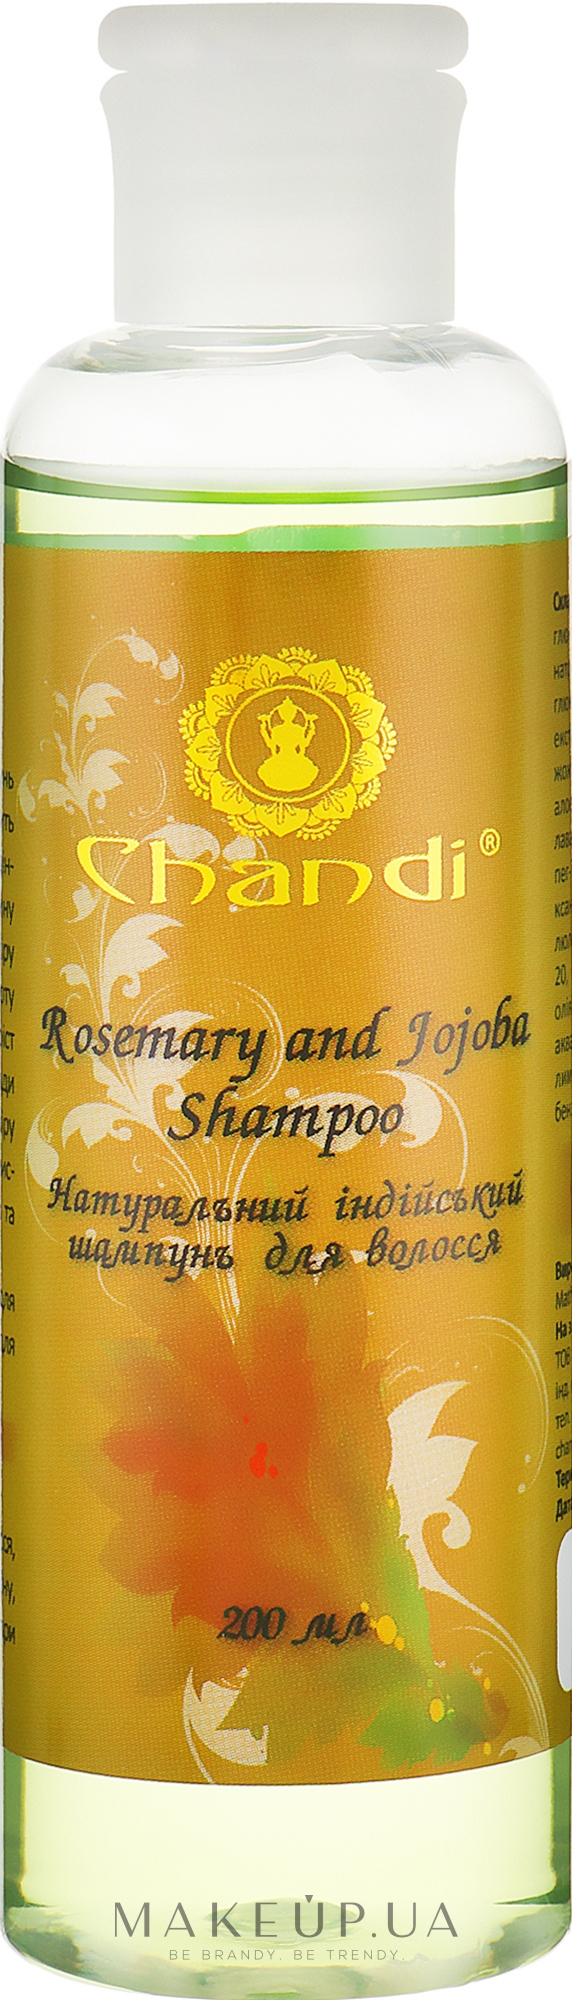 Натуральный индийский шампунь "Розмарин и Жожоба" - Chandi Rosemary and Jojoba Shampoo — фото 200ml